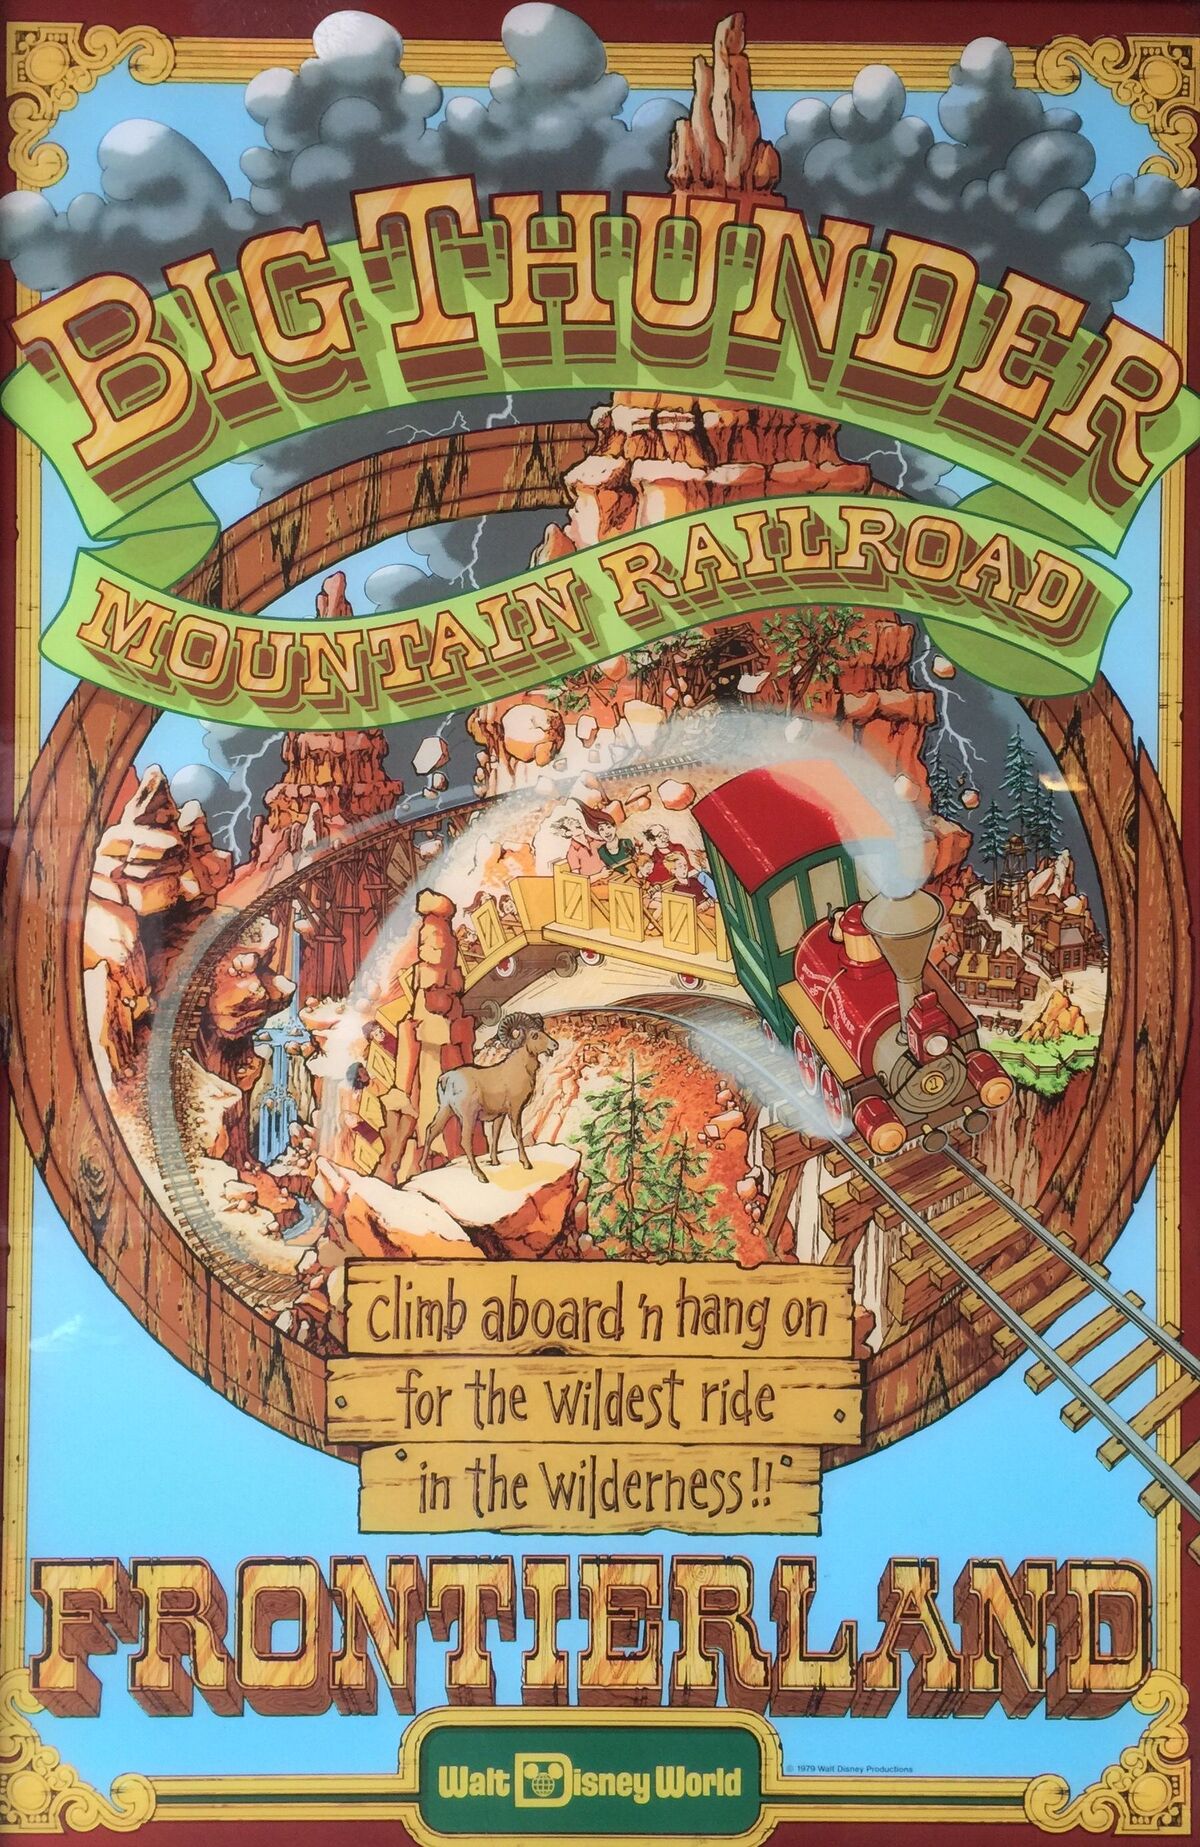 Today in Disney History, 1980: Big Thunder Mountain Railroad